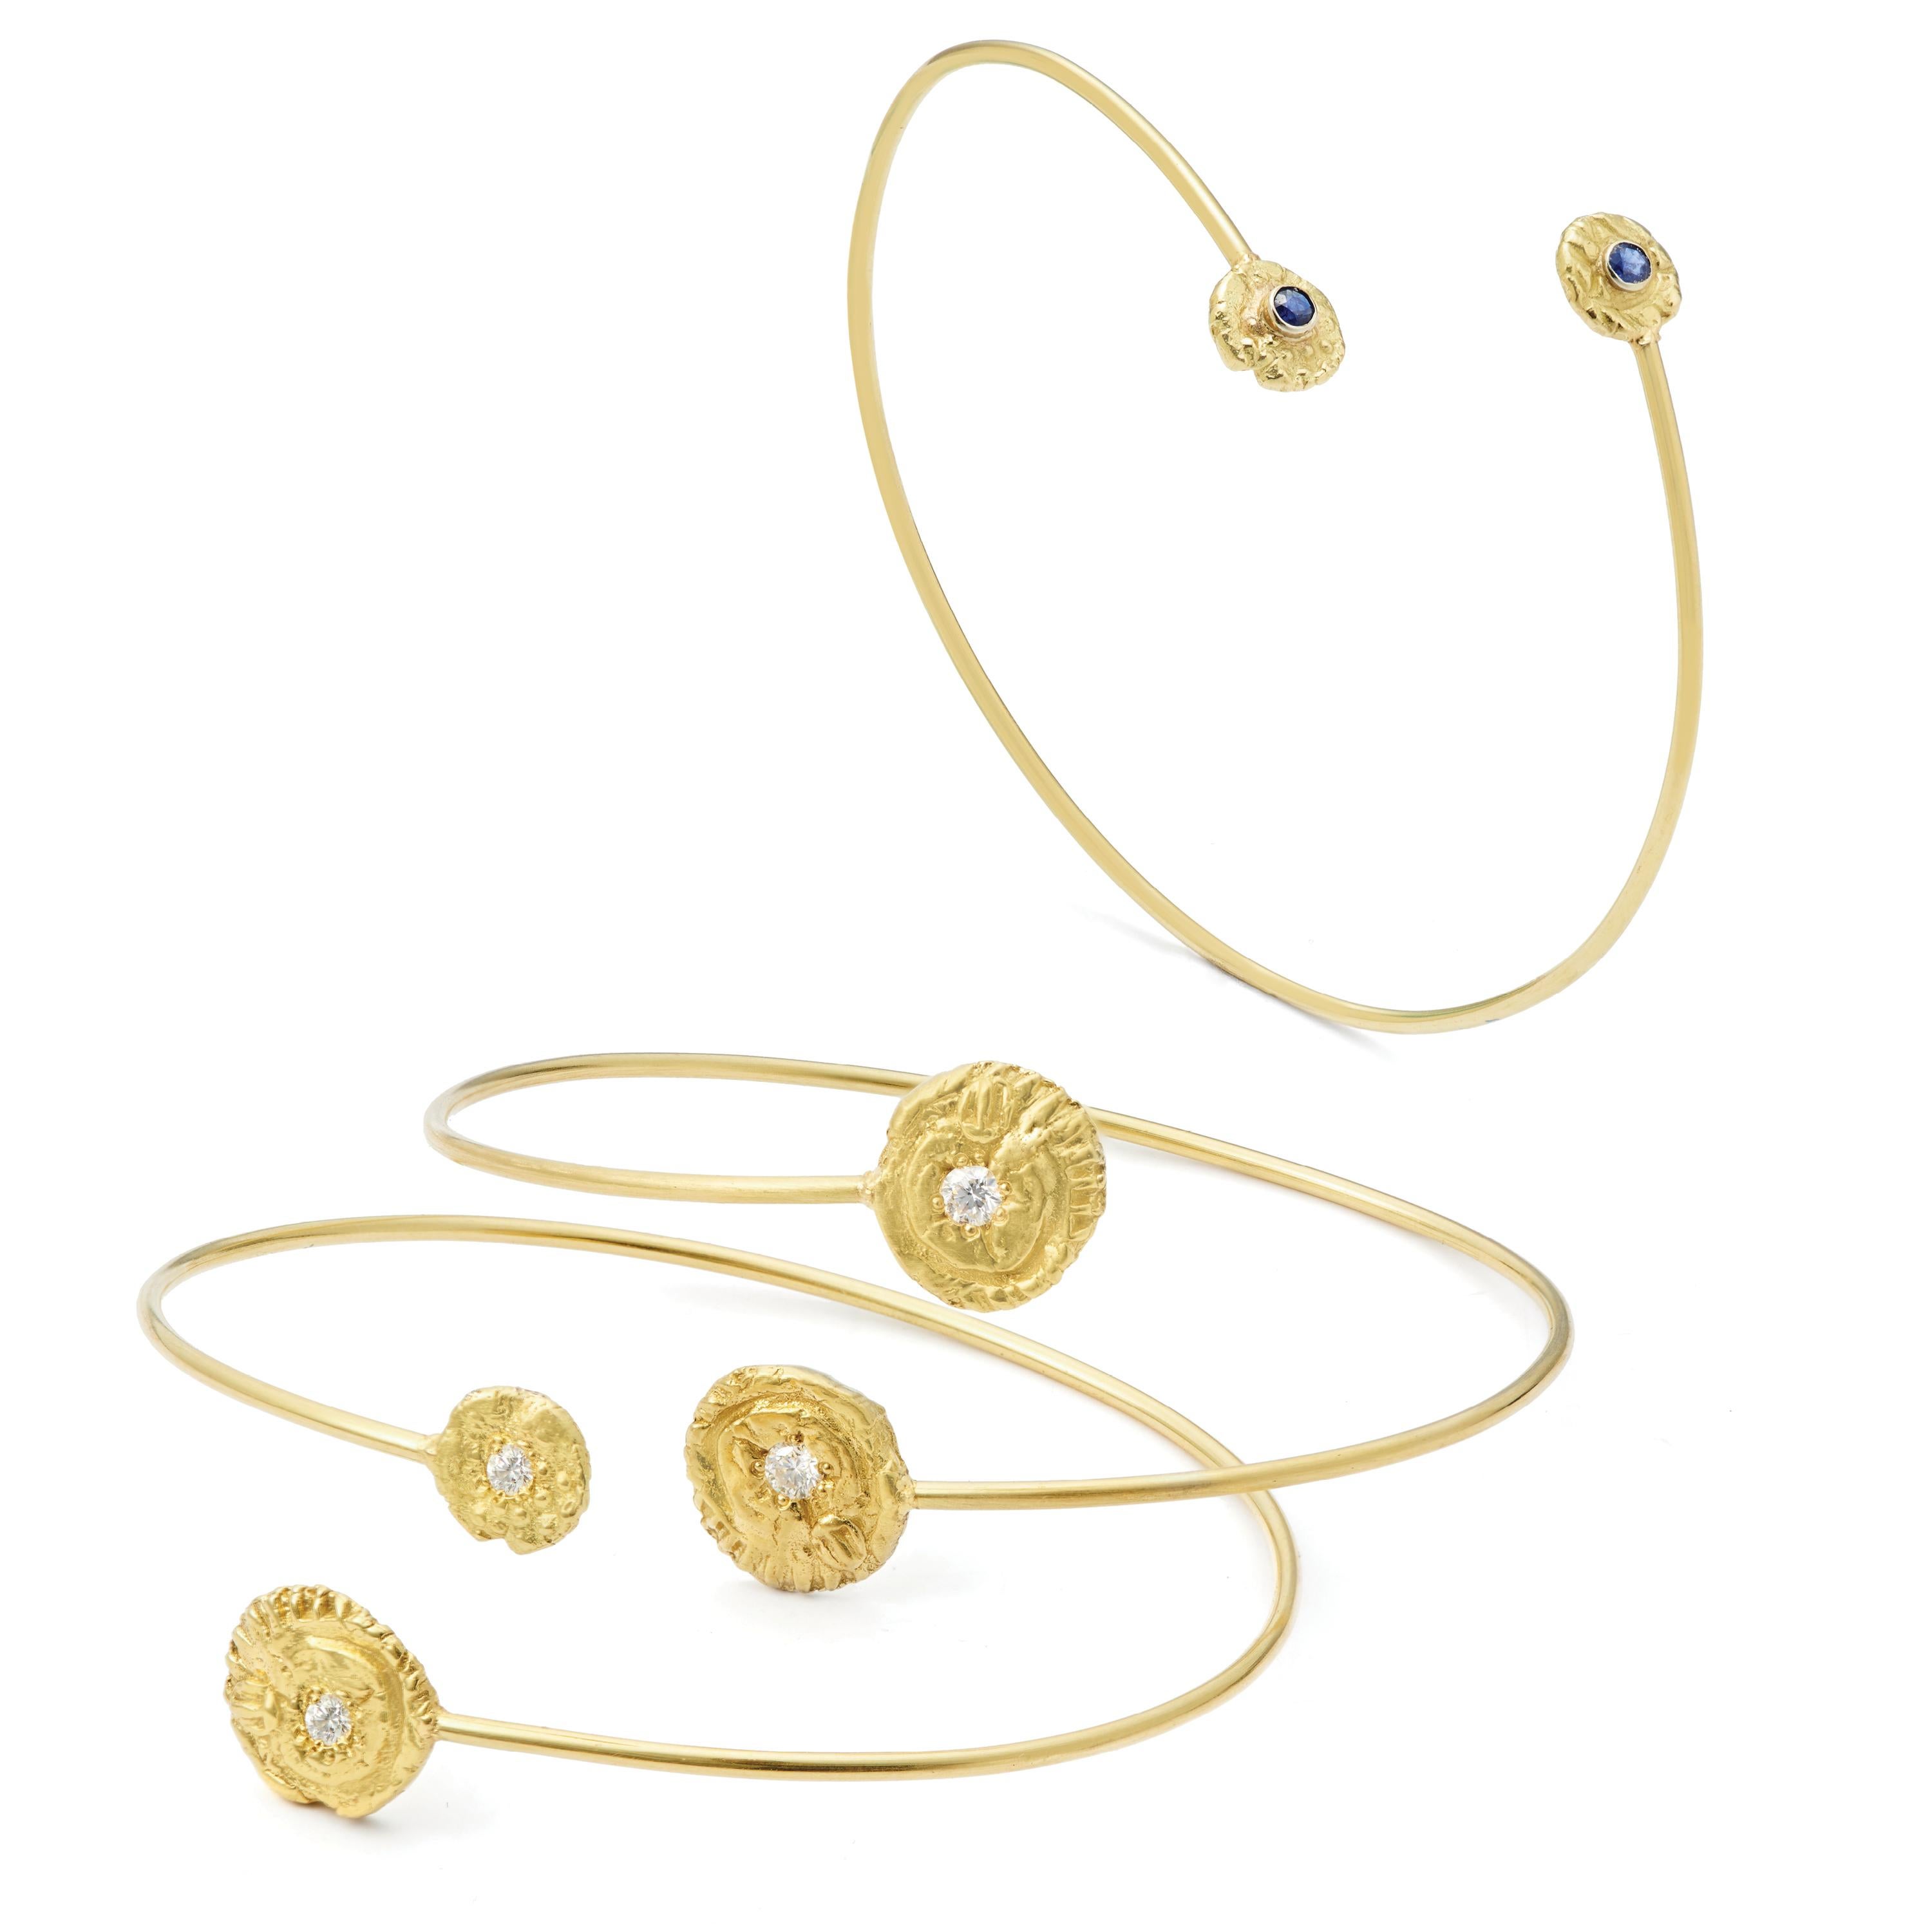 Contemporary Susan Lister Locke “Sea Star” & “Seaquin” Bangle Bracelet with 0.20ct Diamonds For Sale